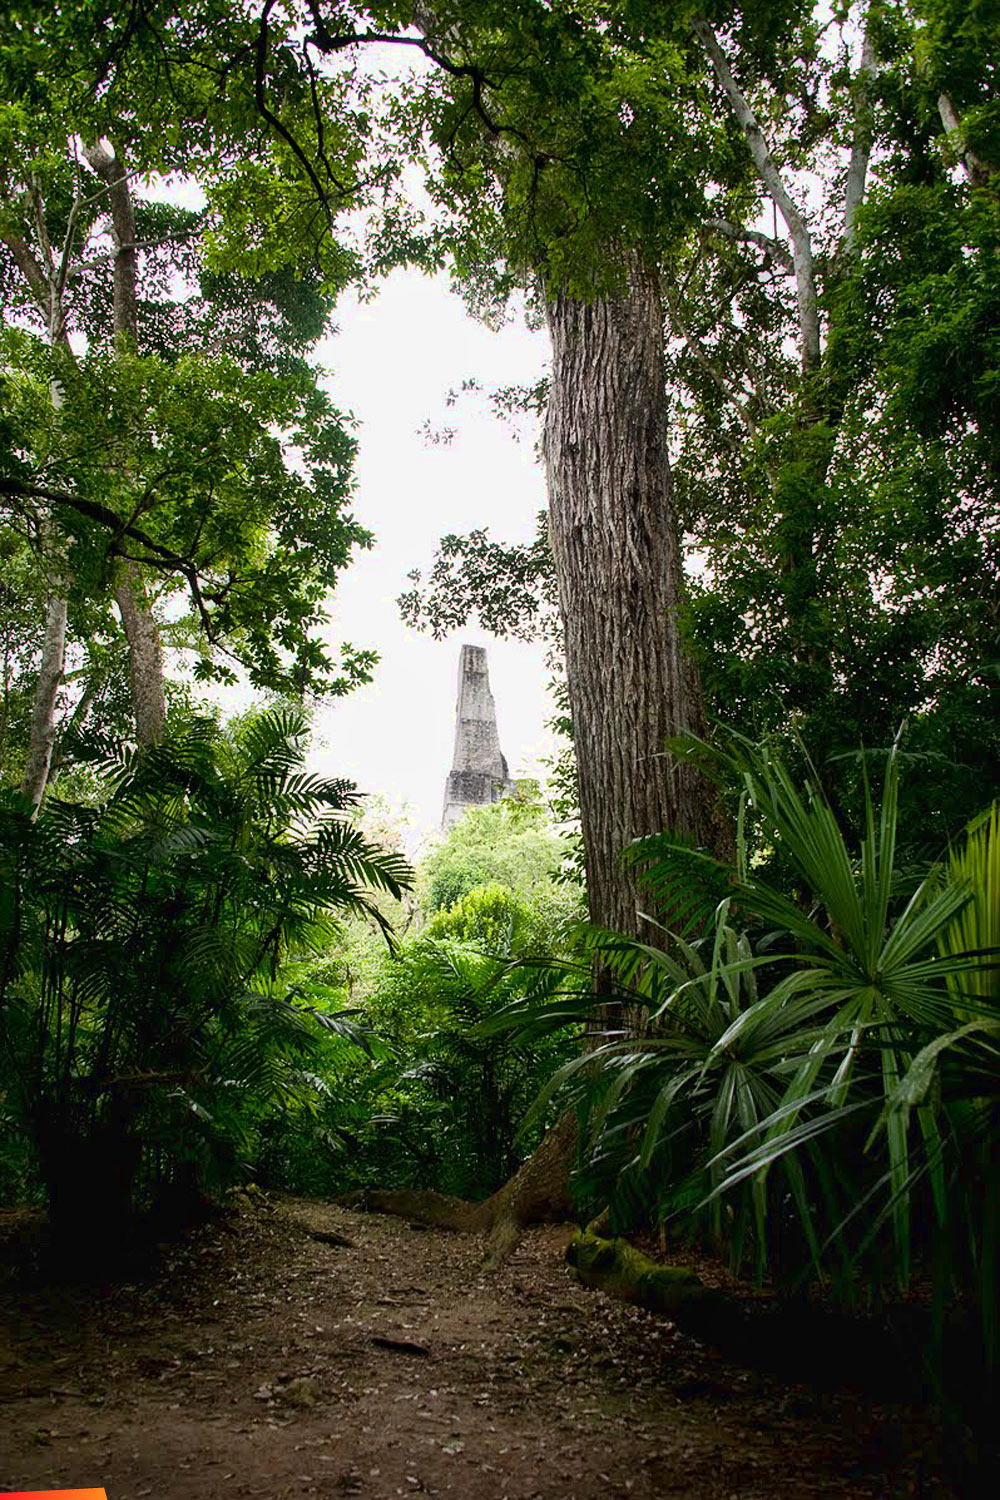 The Ancient City of Tikal